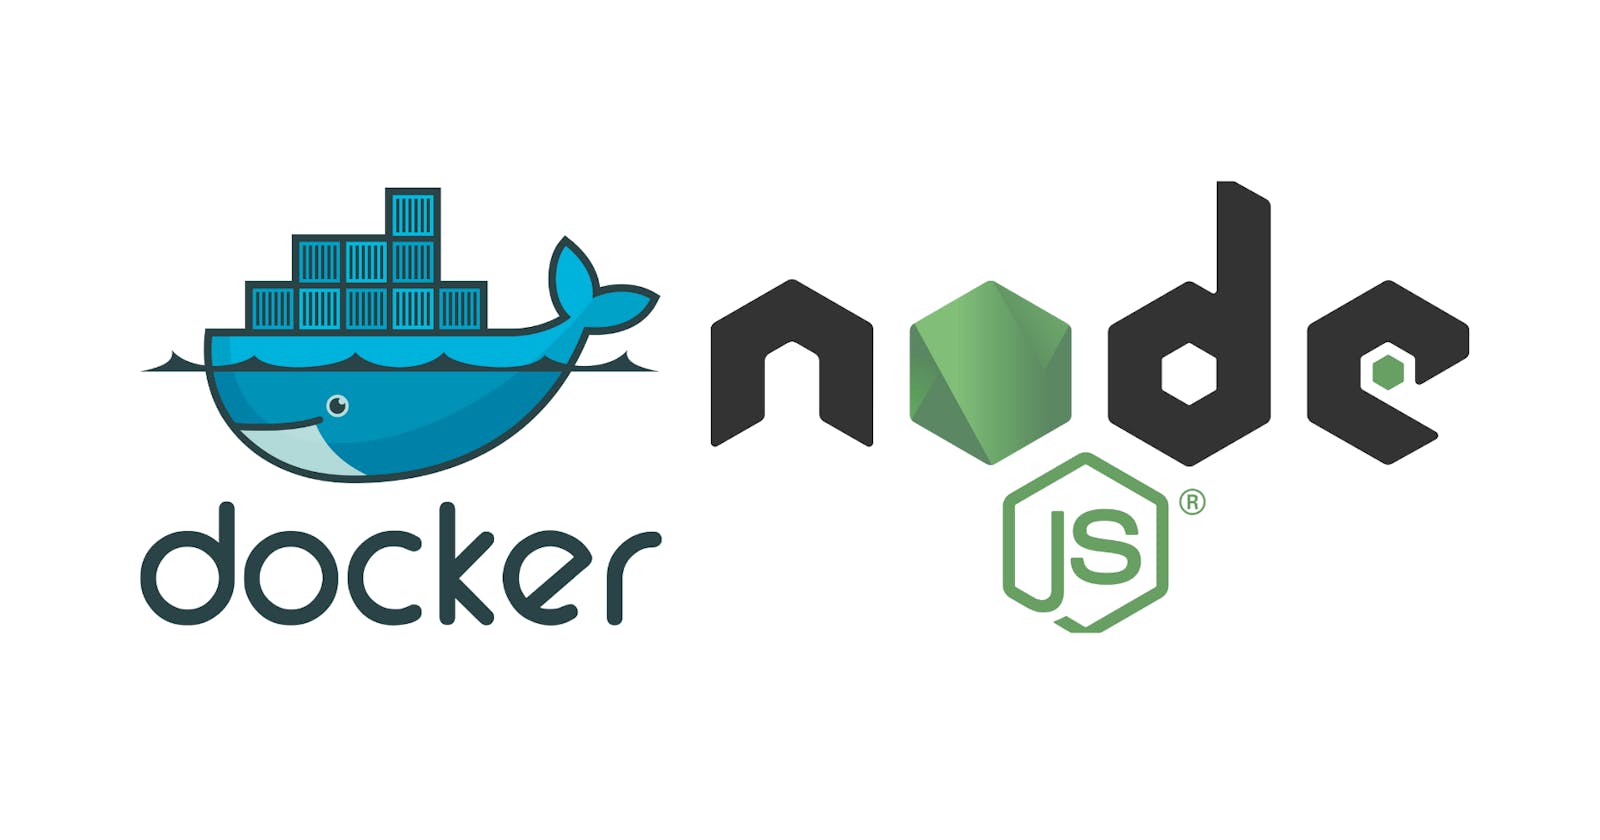 How to use docker to run a node js application